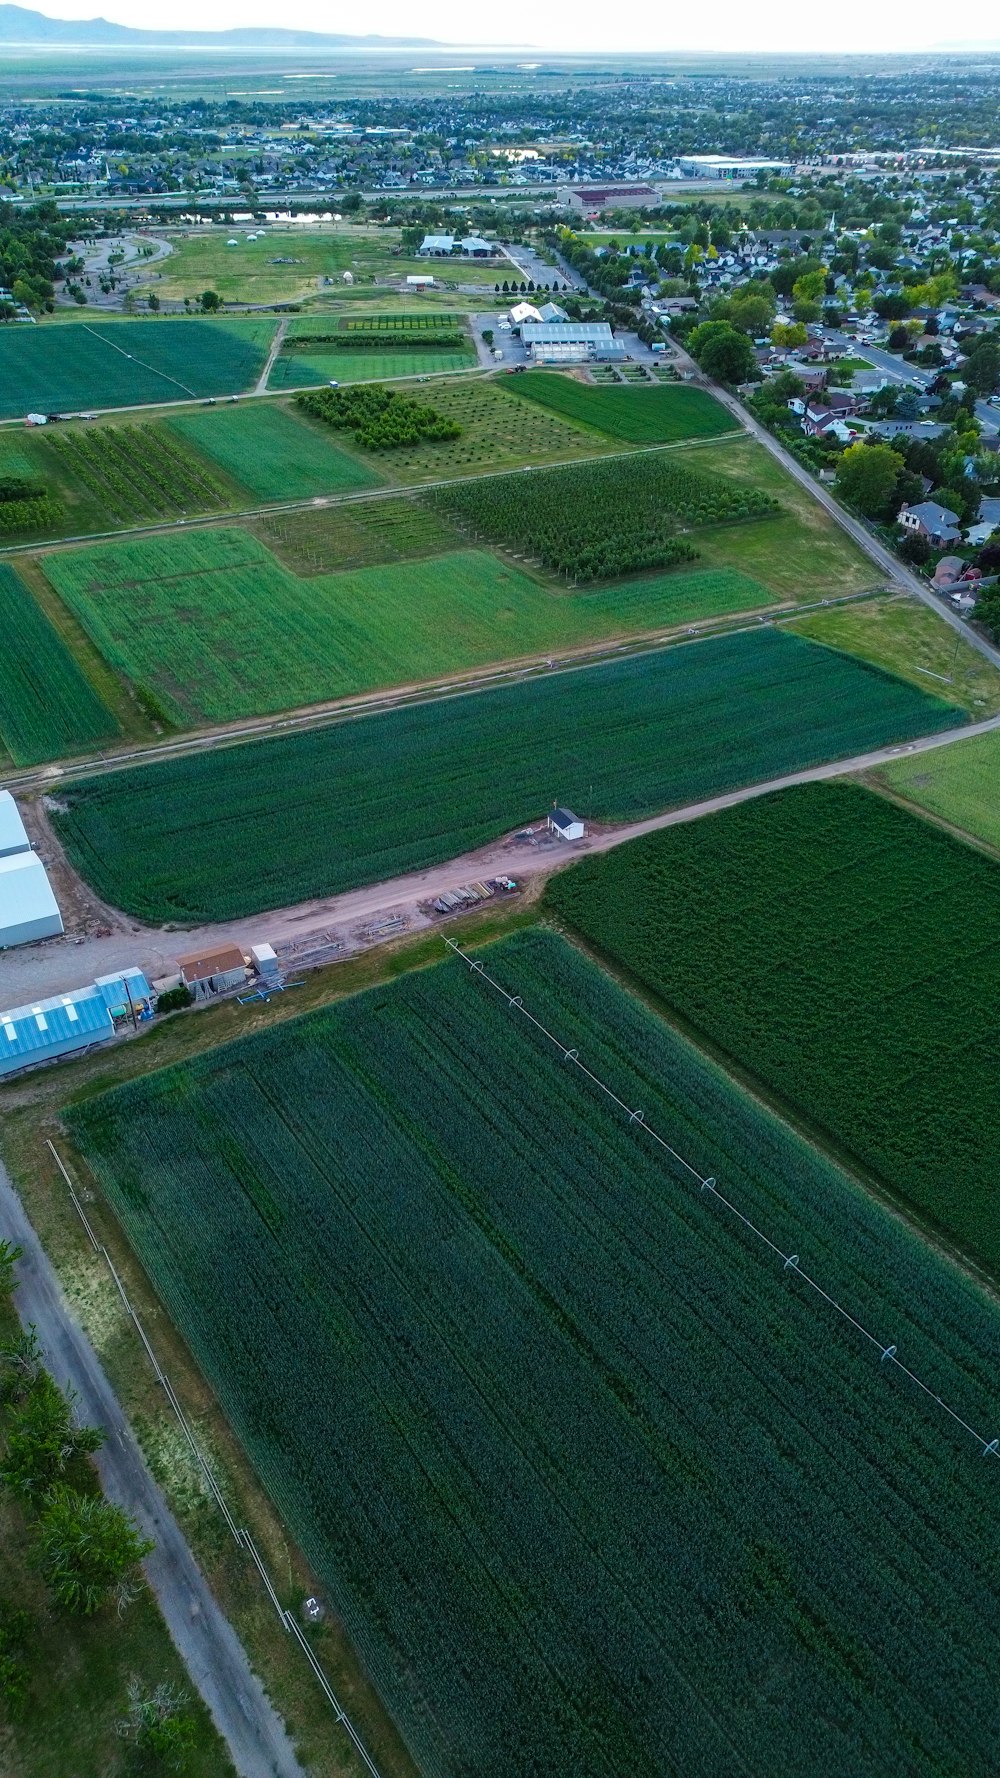 Una vista aérea de una granja y una carretera